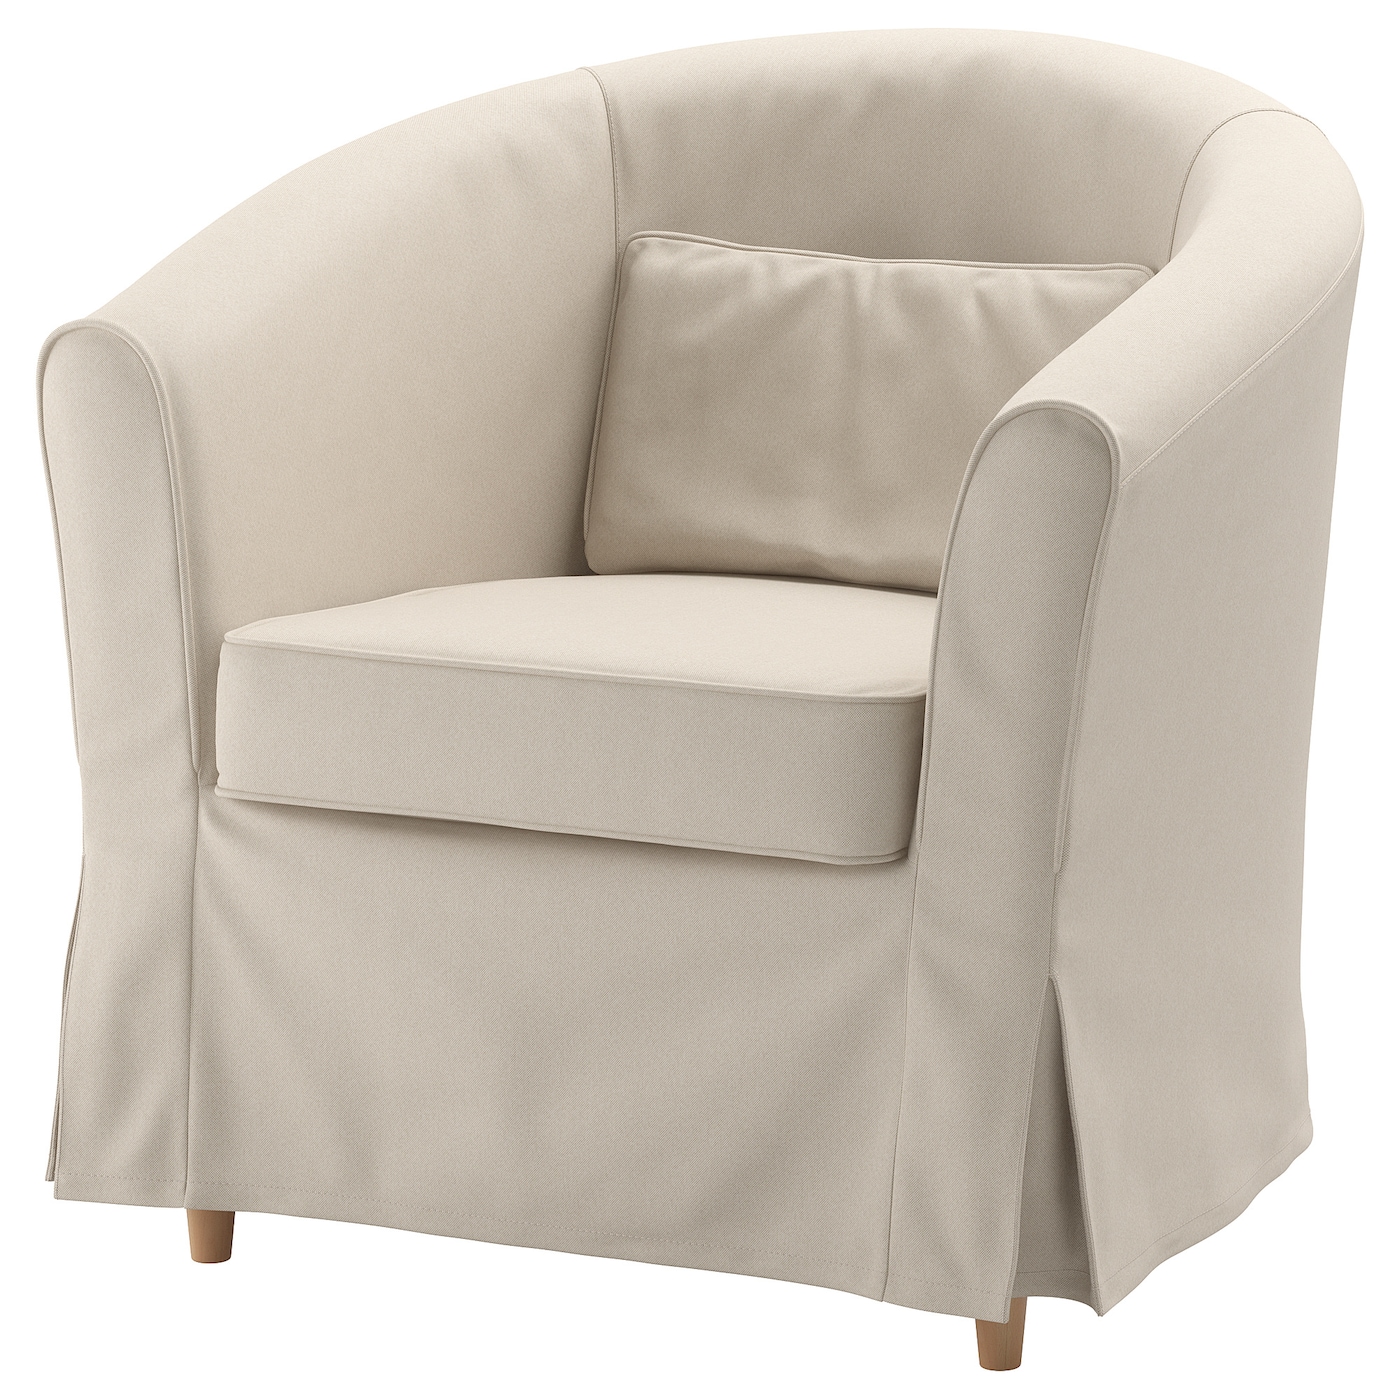 Кресло с подлокотниками - IKEA TULLSTA, 79х69х78 см, бежевый, ТУЛЛЬСТА ИКЕА